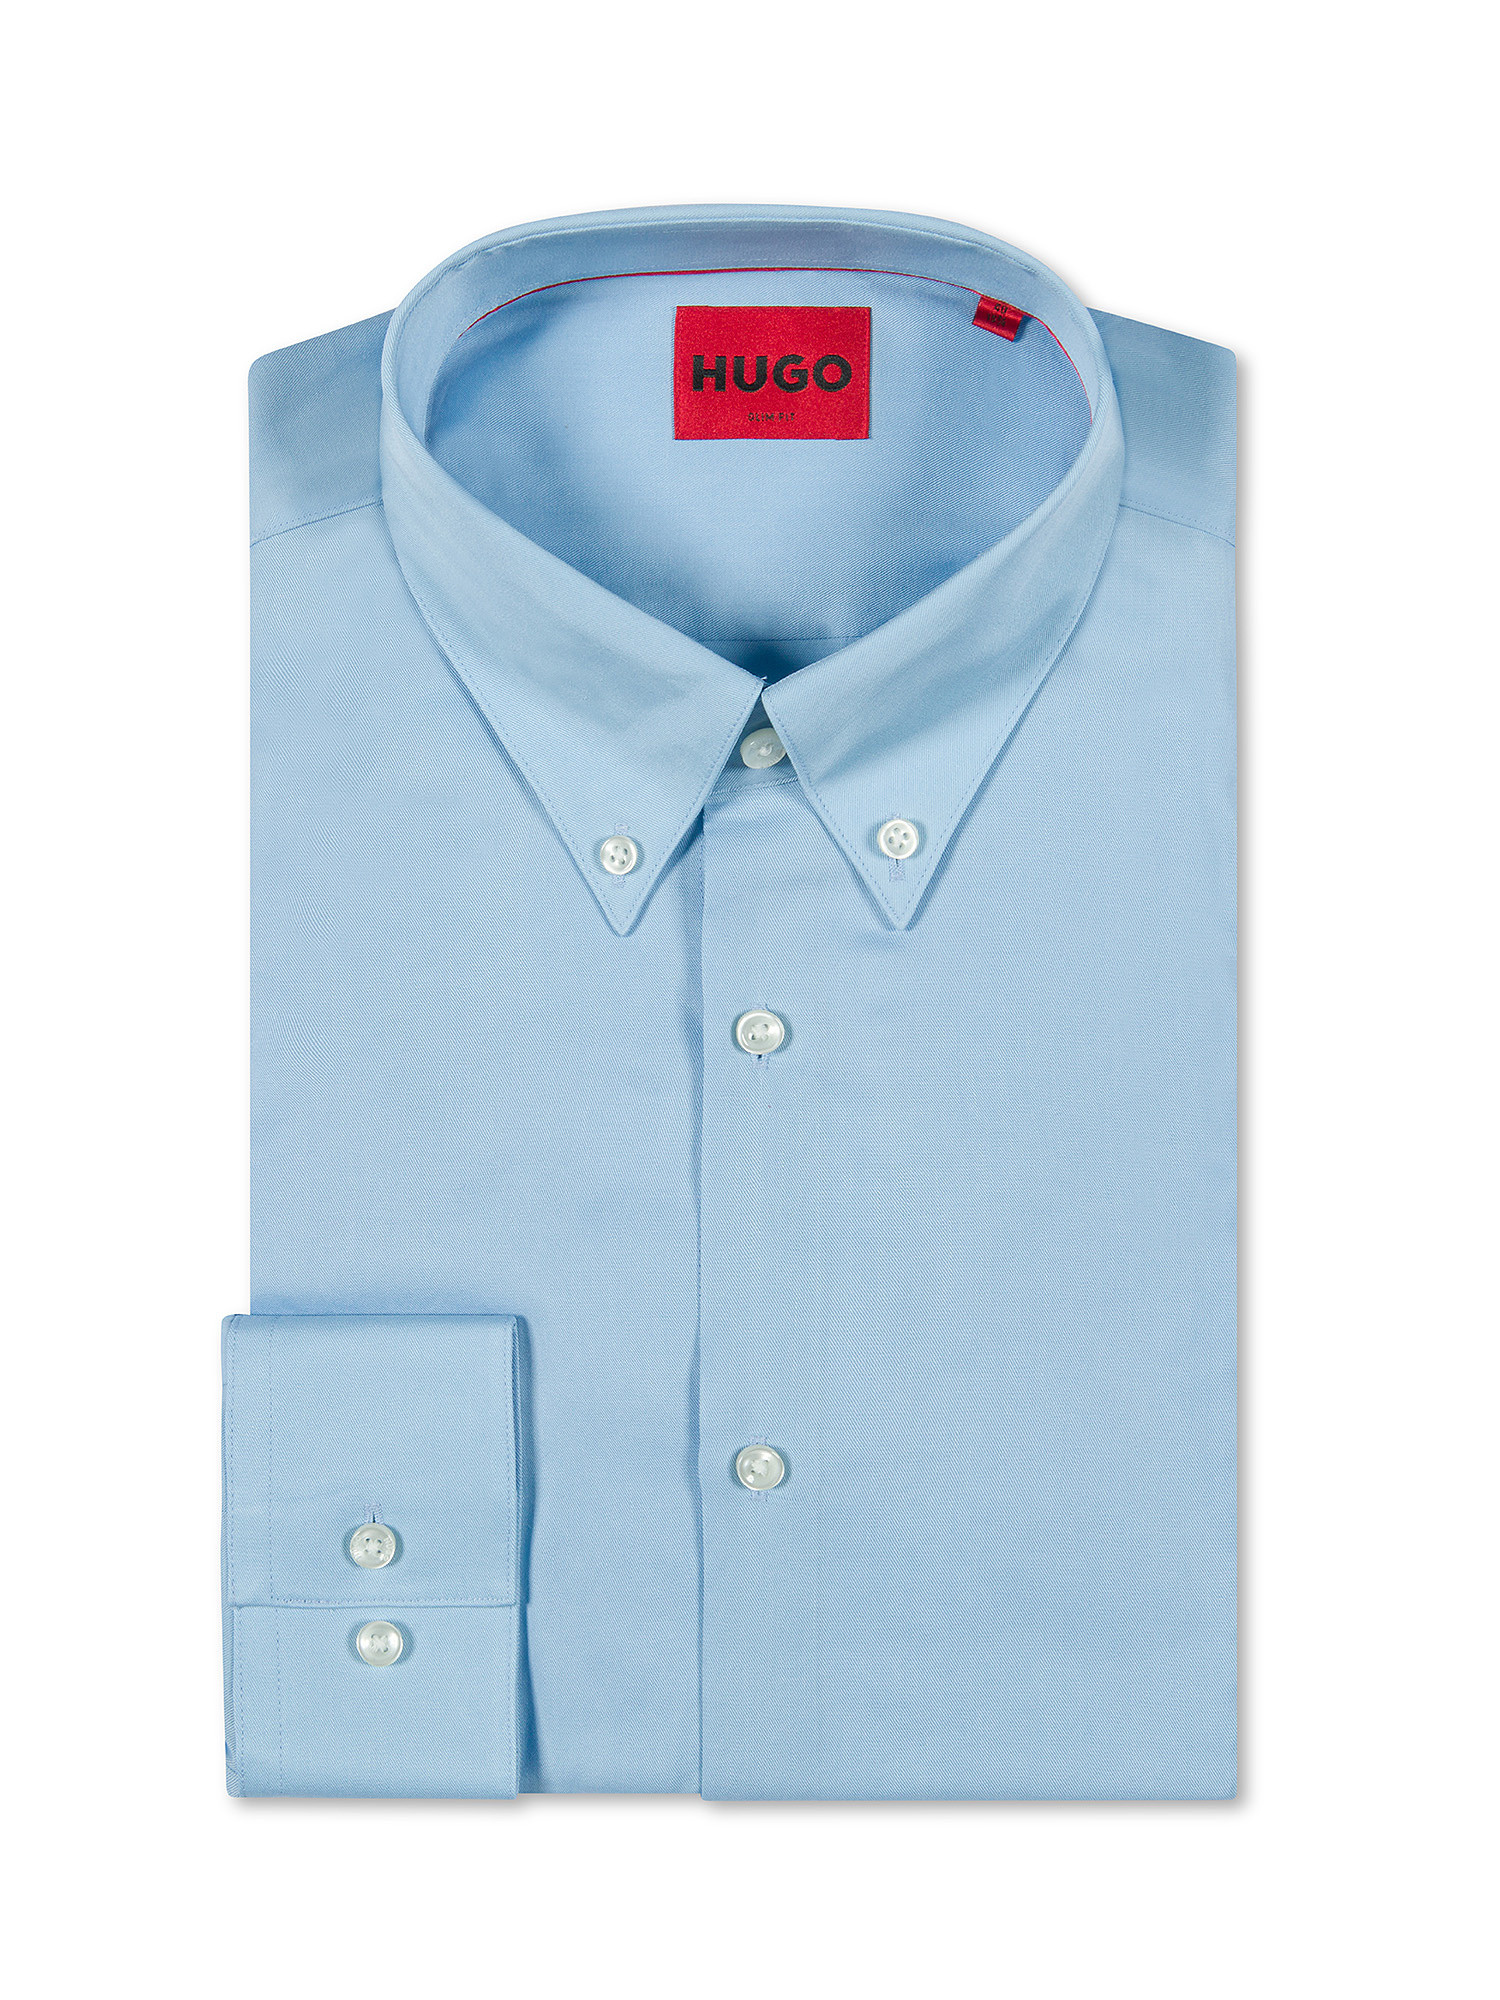 Hugo - Camicia slim fit, Azzurro, large image number 0